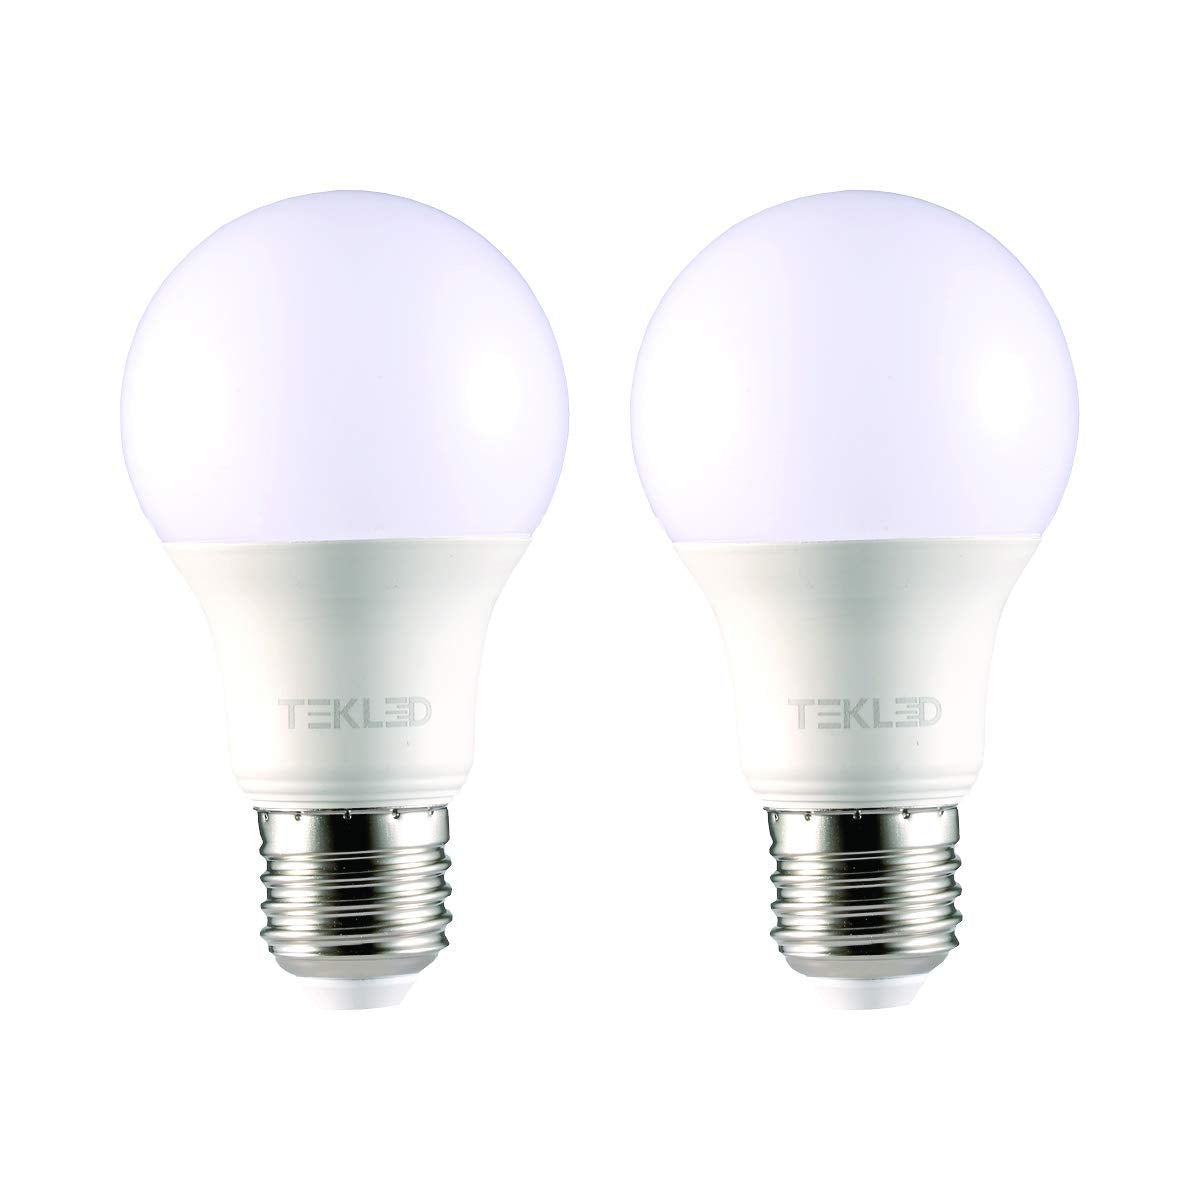 TEKLED® A60 LED Bulbs | E27 Edison Screw | Energy Saving 7W Light Bulb 60W Incandescent Bulb Equivalent | 2700K Dimmable 595LM | 2-Pack | Warm White